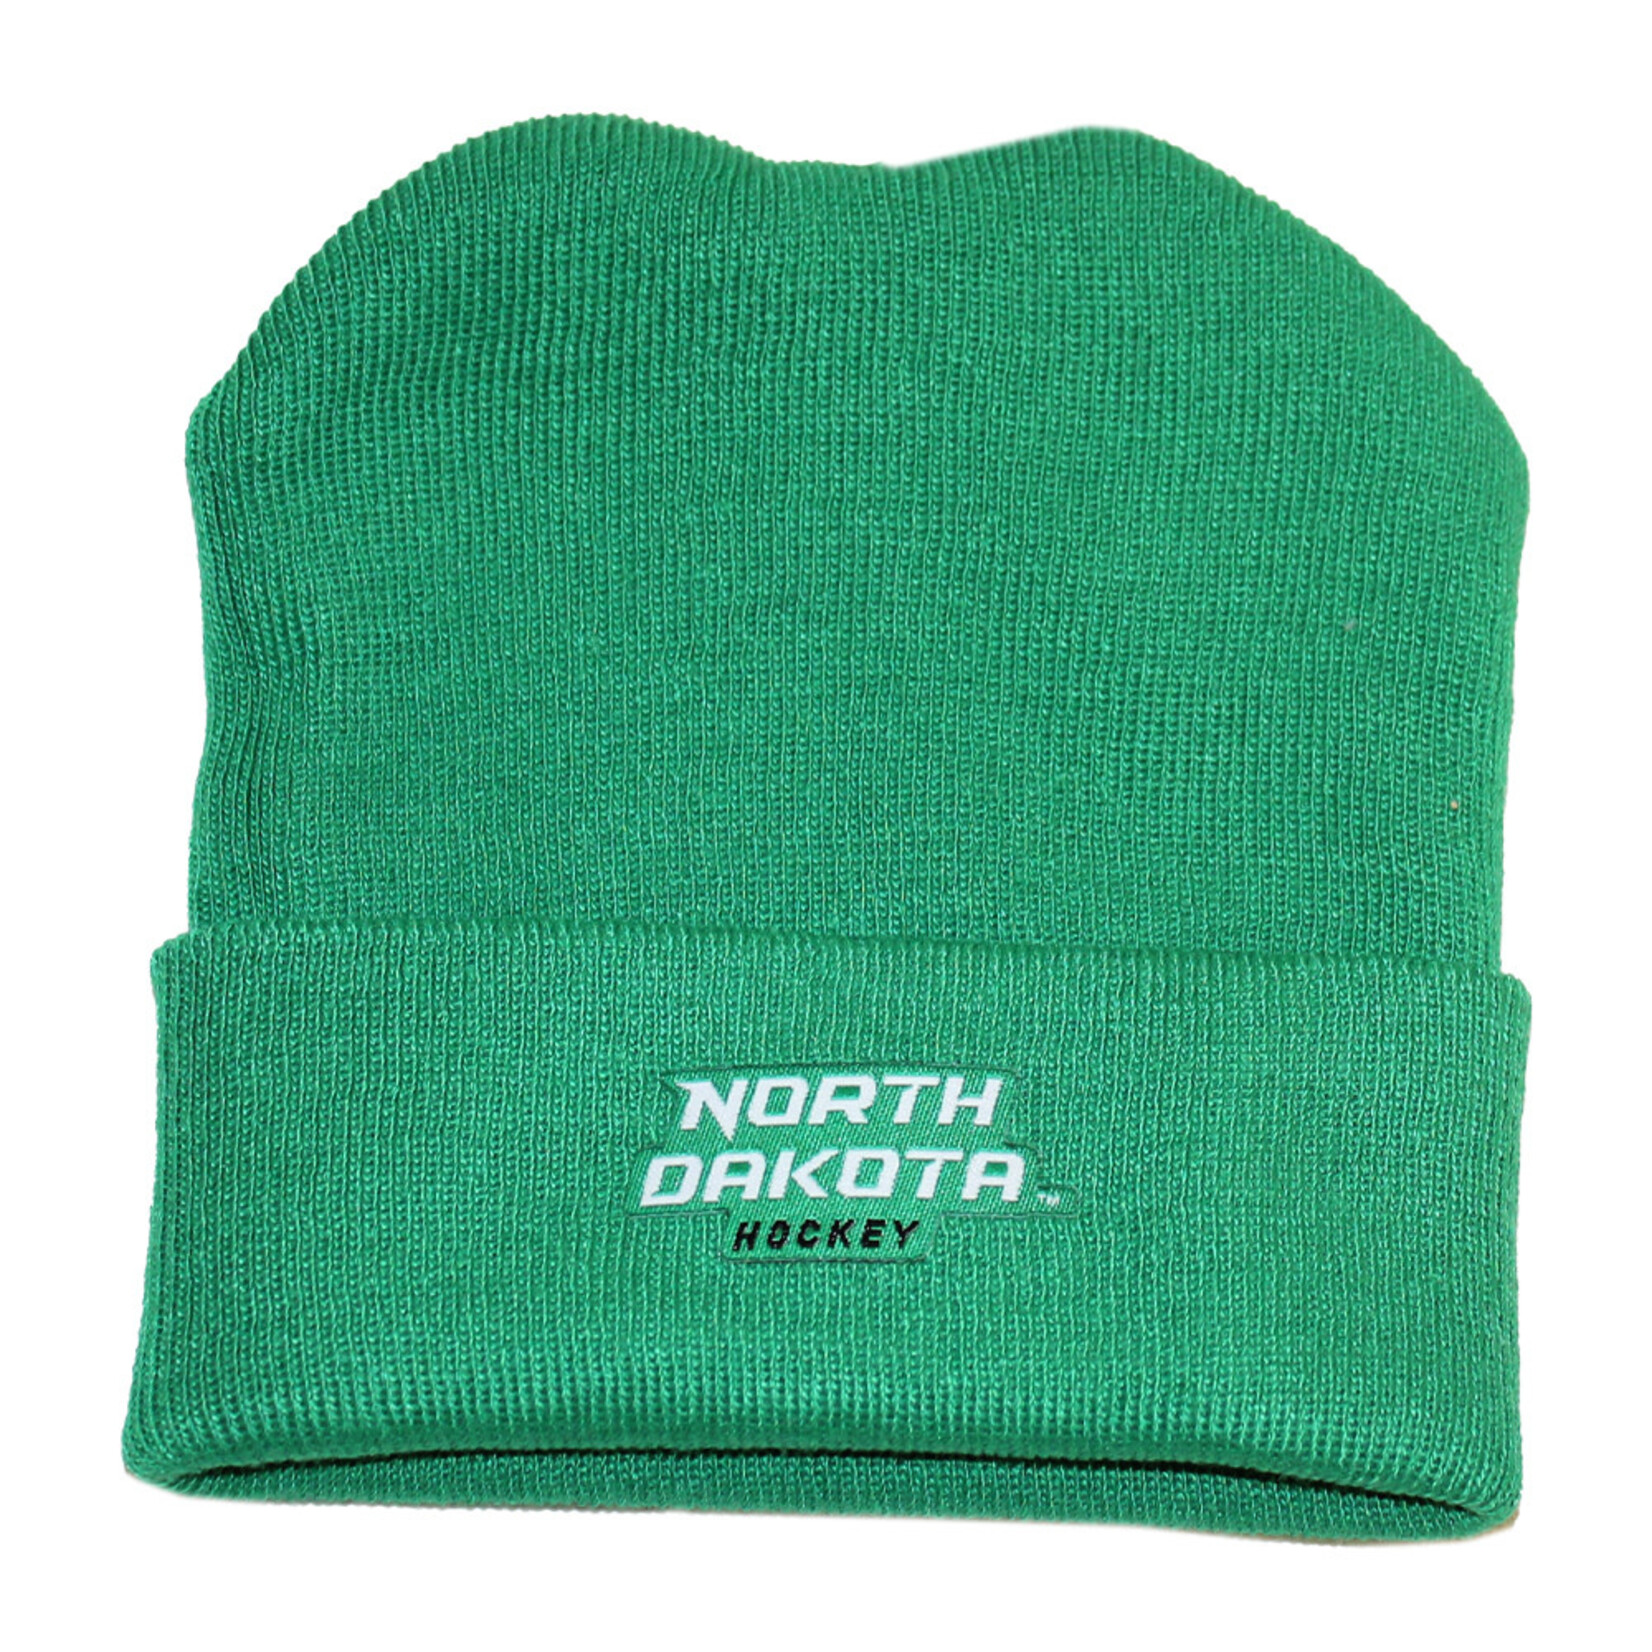 Creative Knitwear Newborn North Dakota Hockey Knit Cap